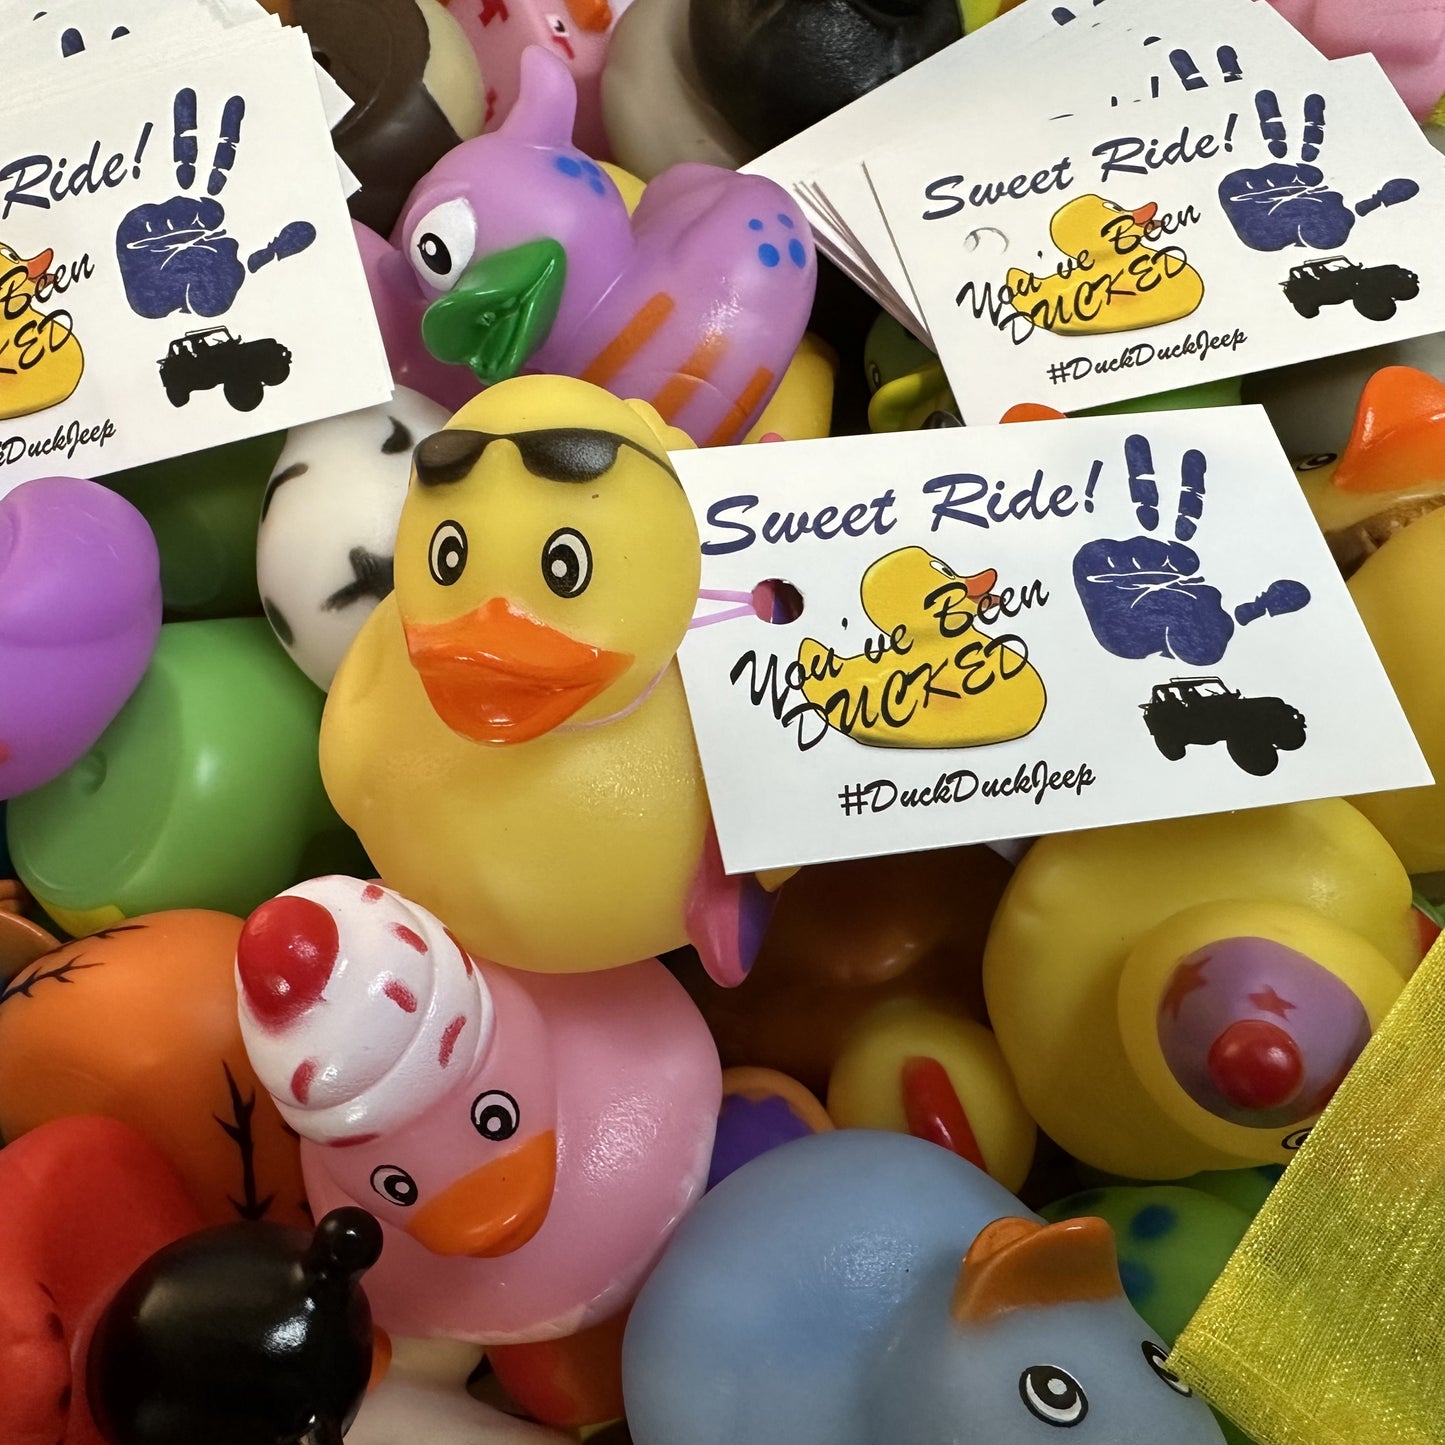 25 Ducks & Tags for #DuckDuckJeep